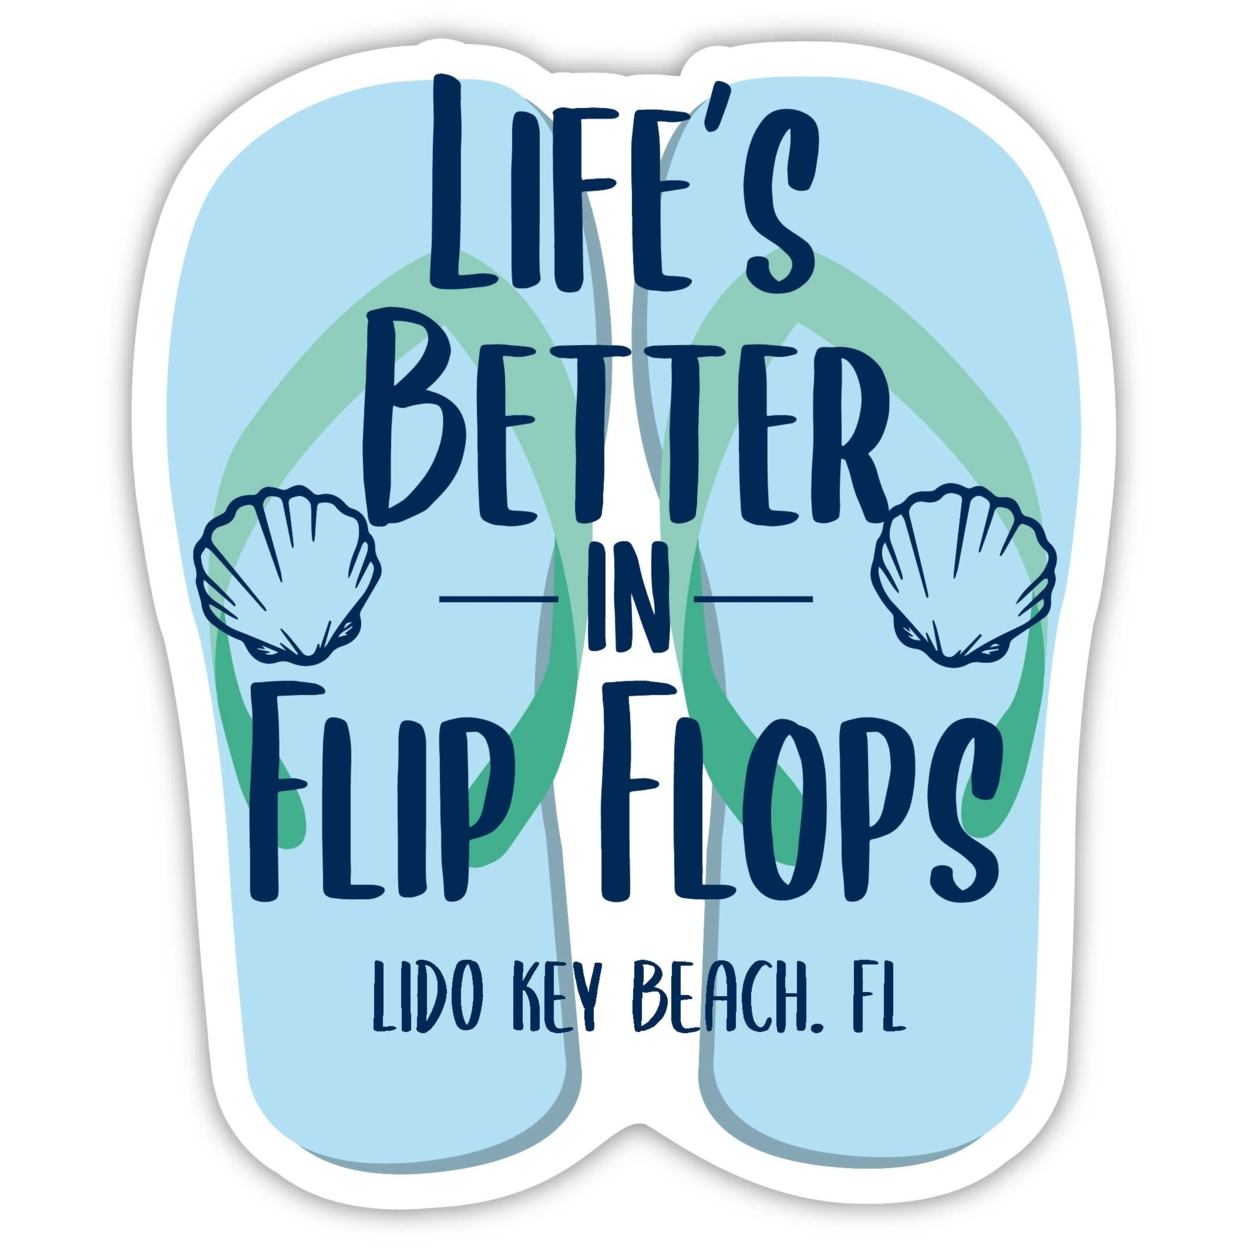 Lido Key Beach Florida Souvenir 4 Inch Vinyl Decal Sticker Flip Flop Design